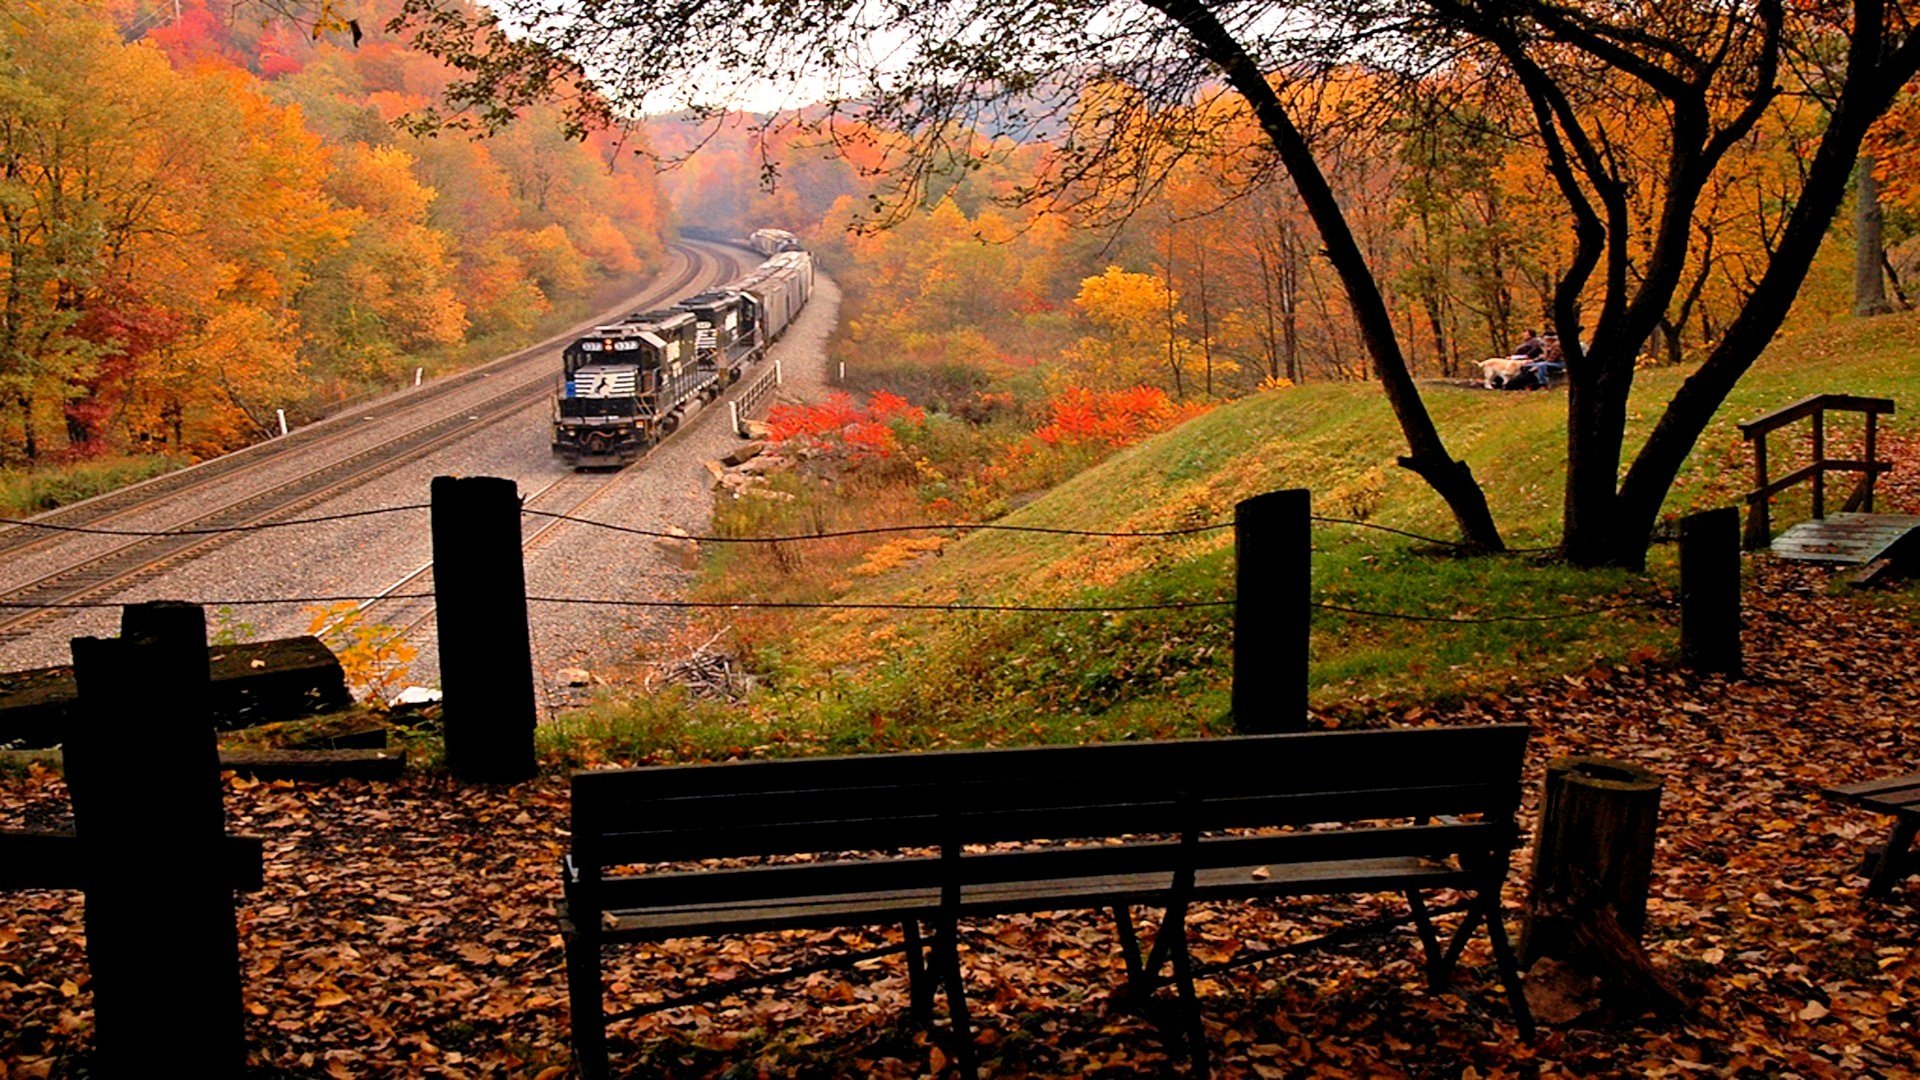 Long Train Running Through Autumn Landscape